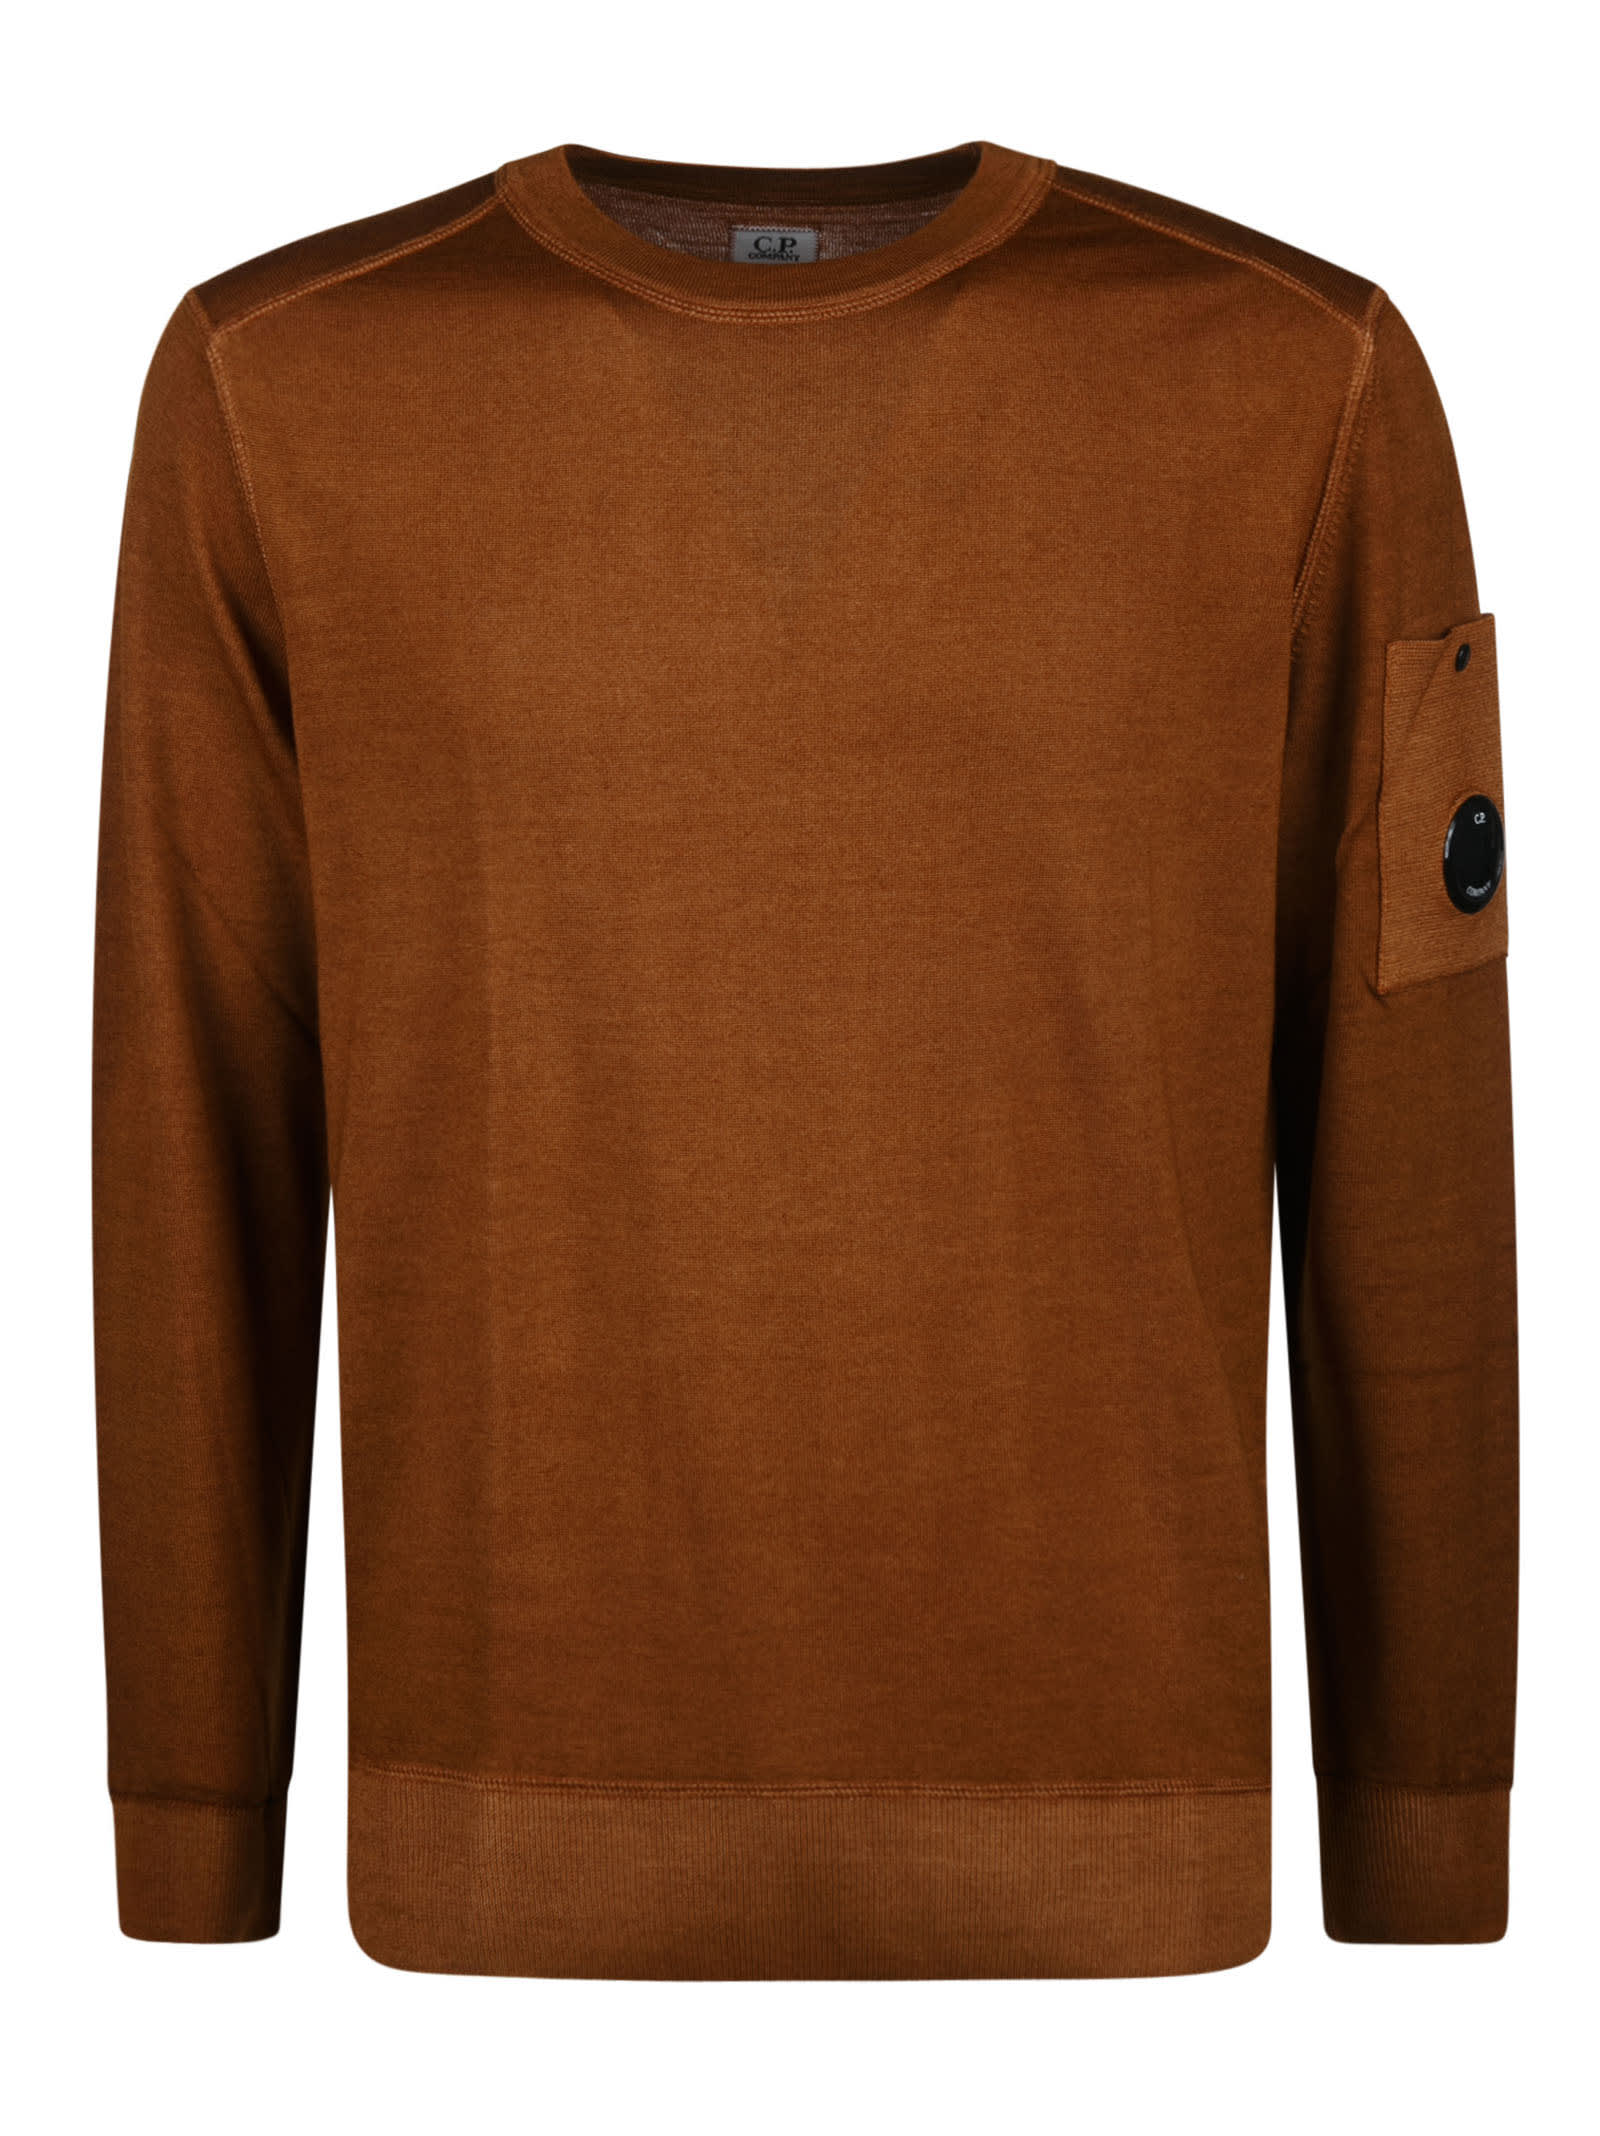 C.P. Company Fast Dyed Merino Sweater